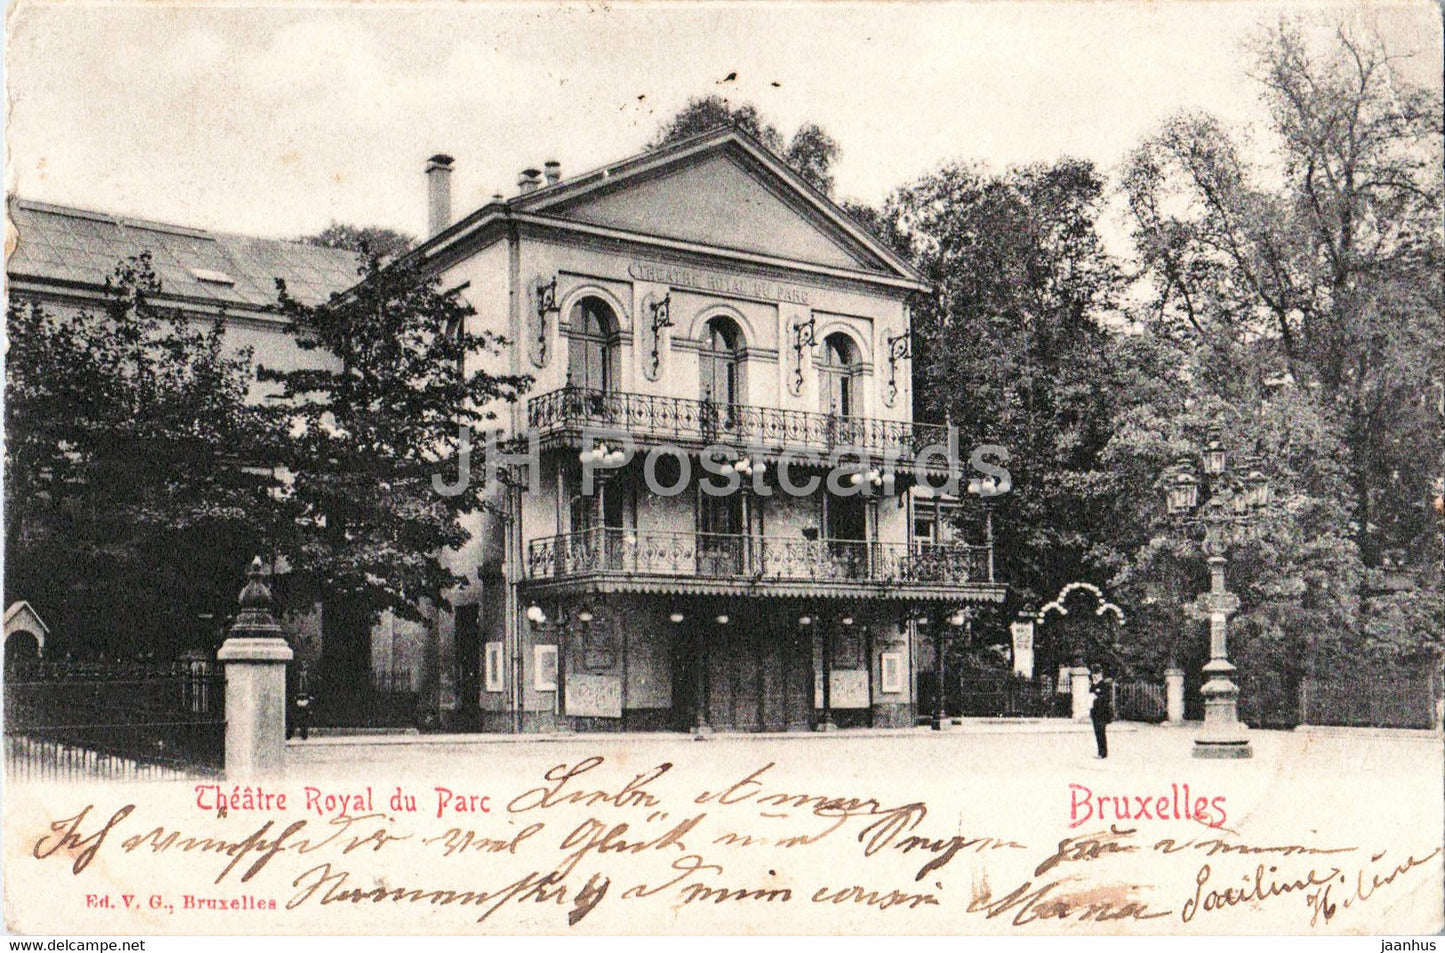 Bruxelles - Brussels - Theatre Royal du Parc - old postcard - 1902 - Belgium - used - JH Postcards